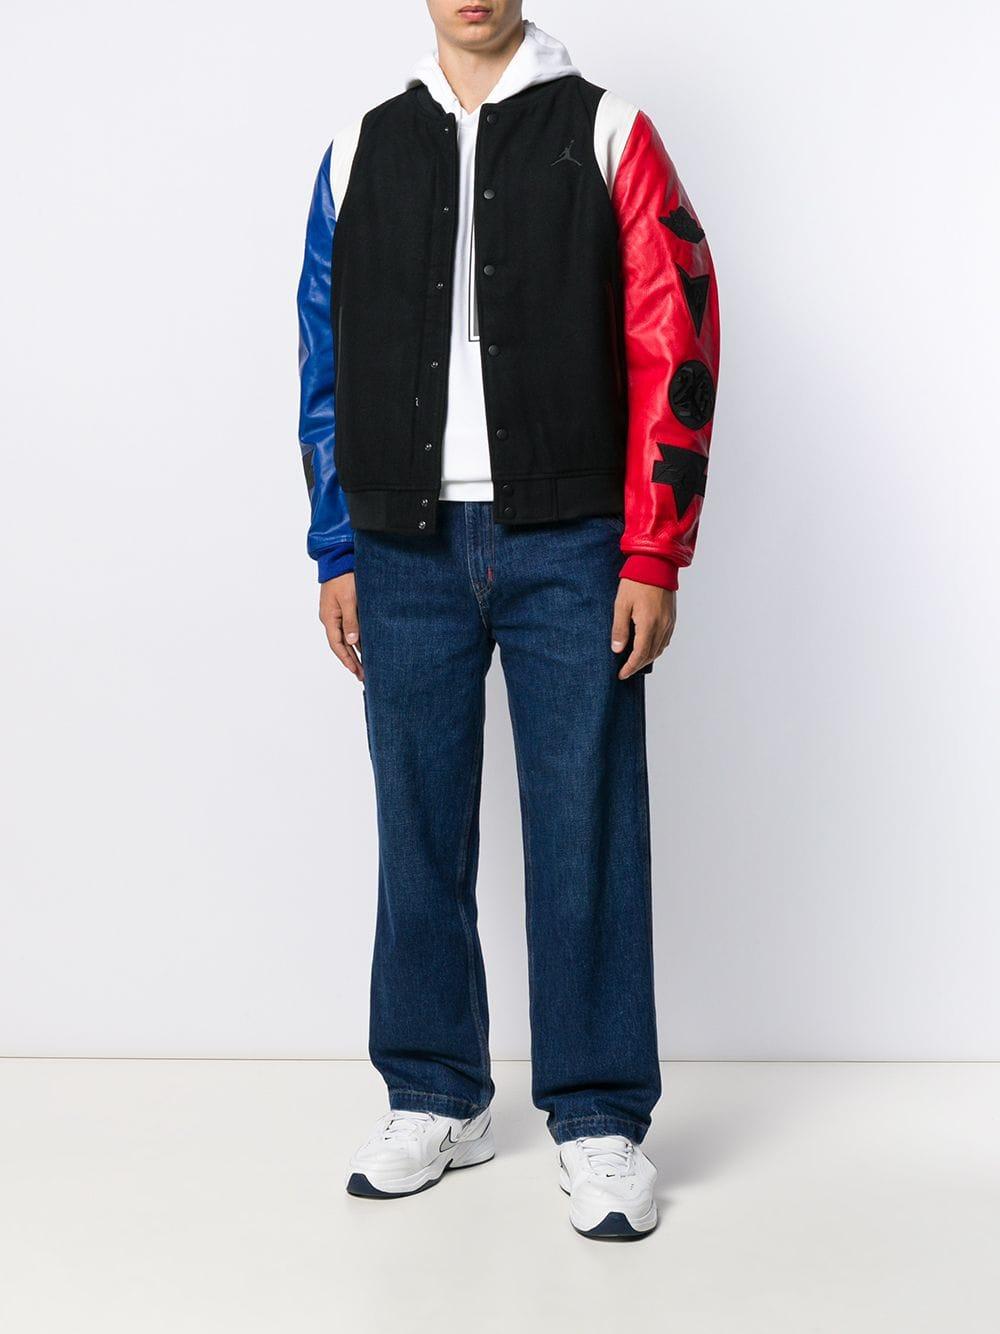 Nike Air Jordan MJ Sport DNA Wool Varsity Jacket CK9350 011 Men's SMALL  ($250)